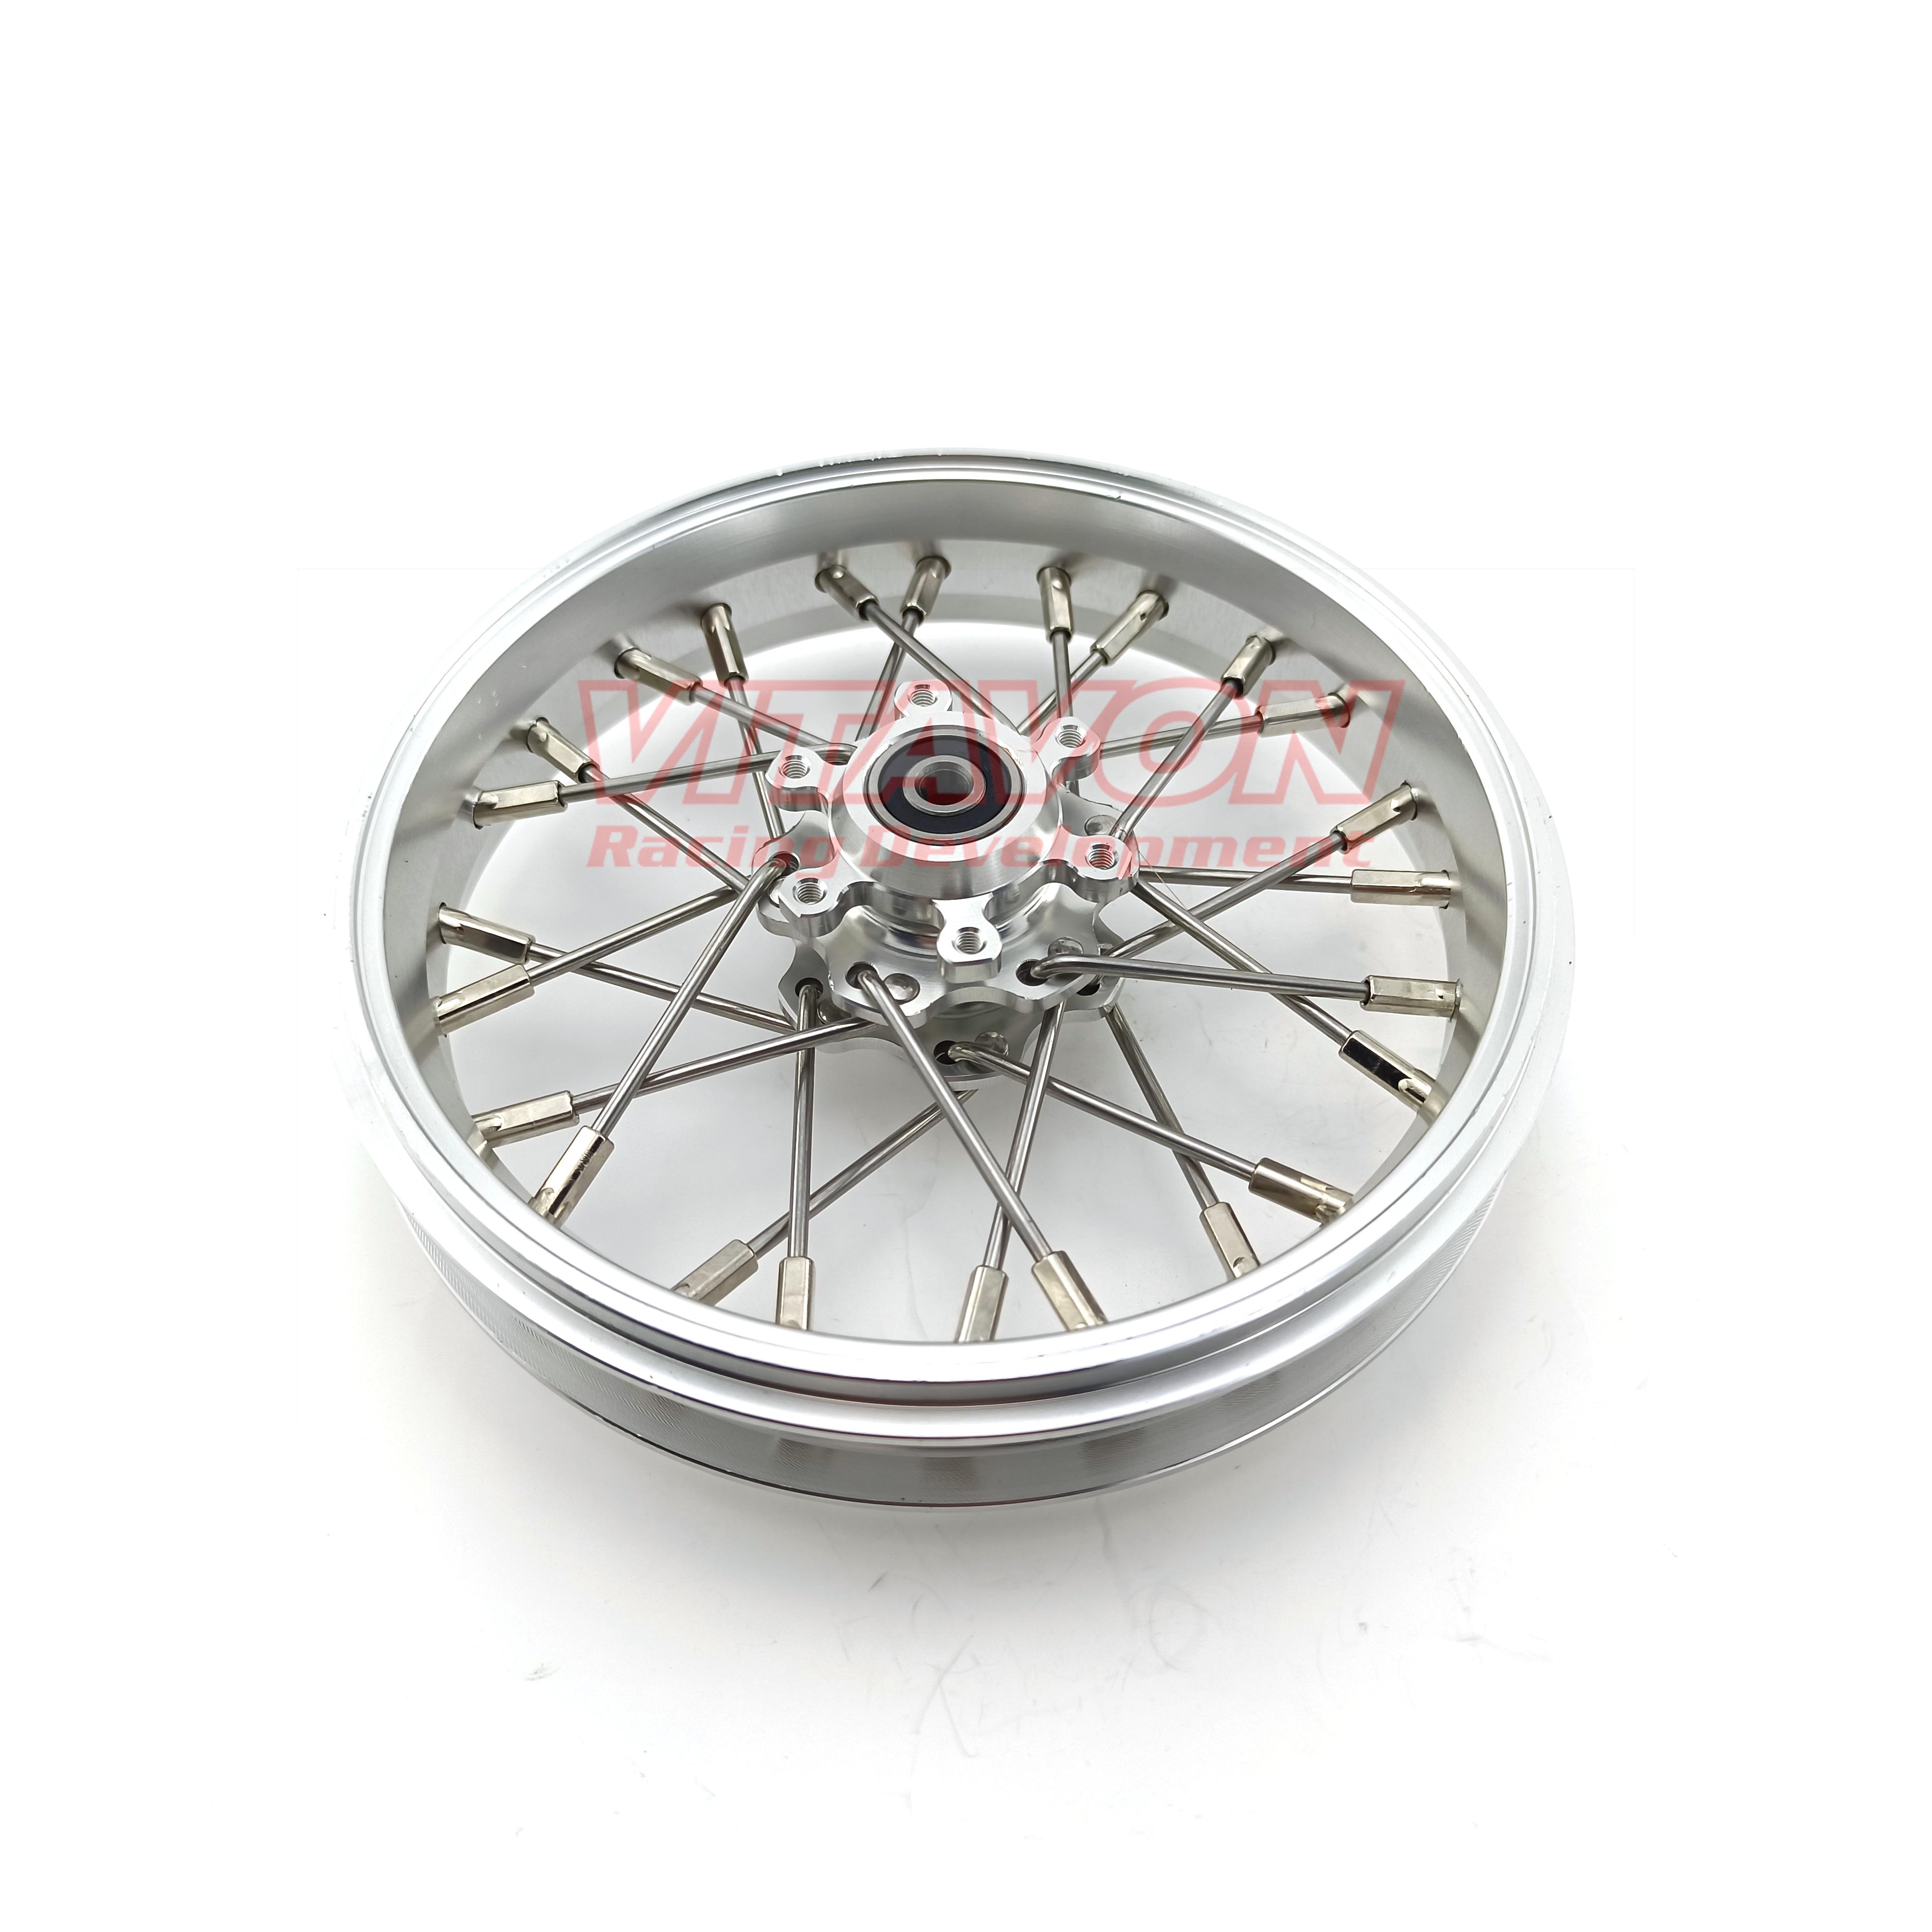 VITAVON CNC Aluminum Front Spoke Wheel For Losi Promoto MX Bike